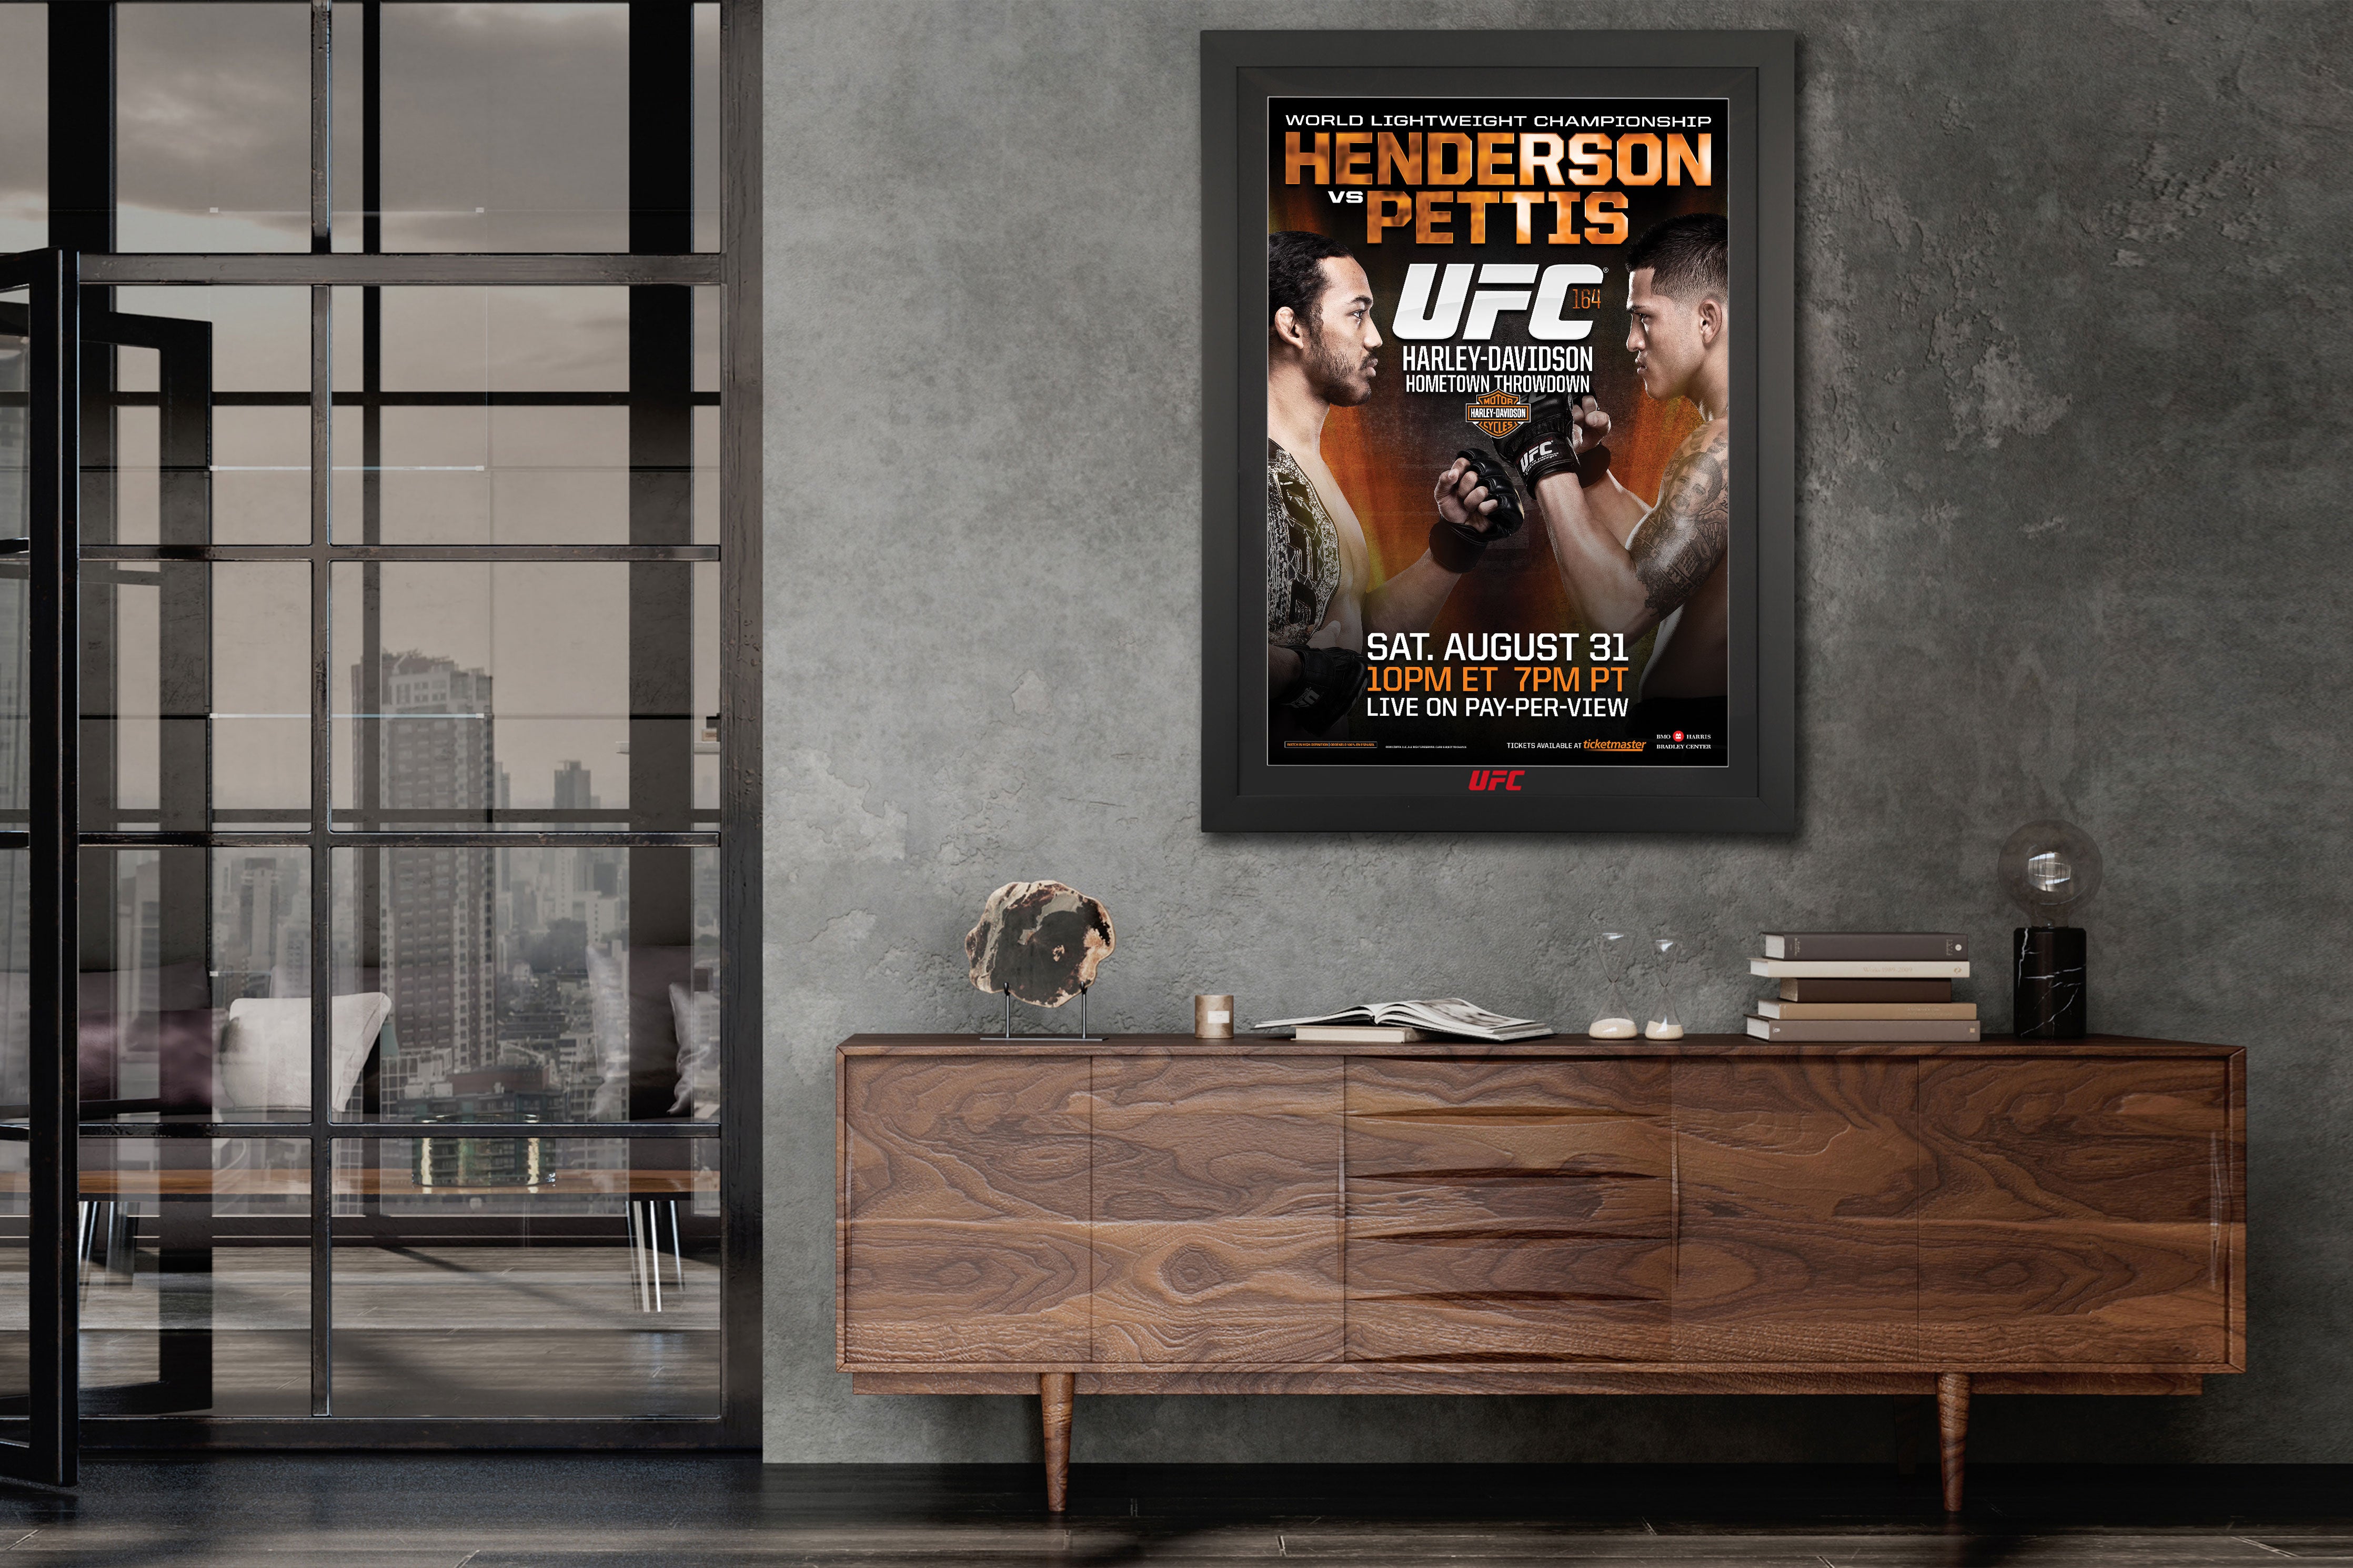 UFC 164: Henderson vs Pettis 2 Signed Event Poster